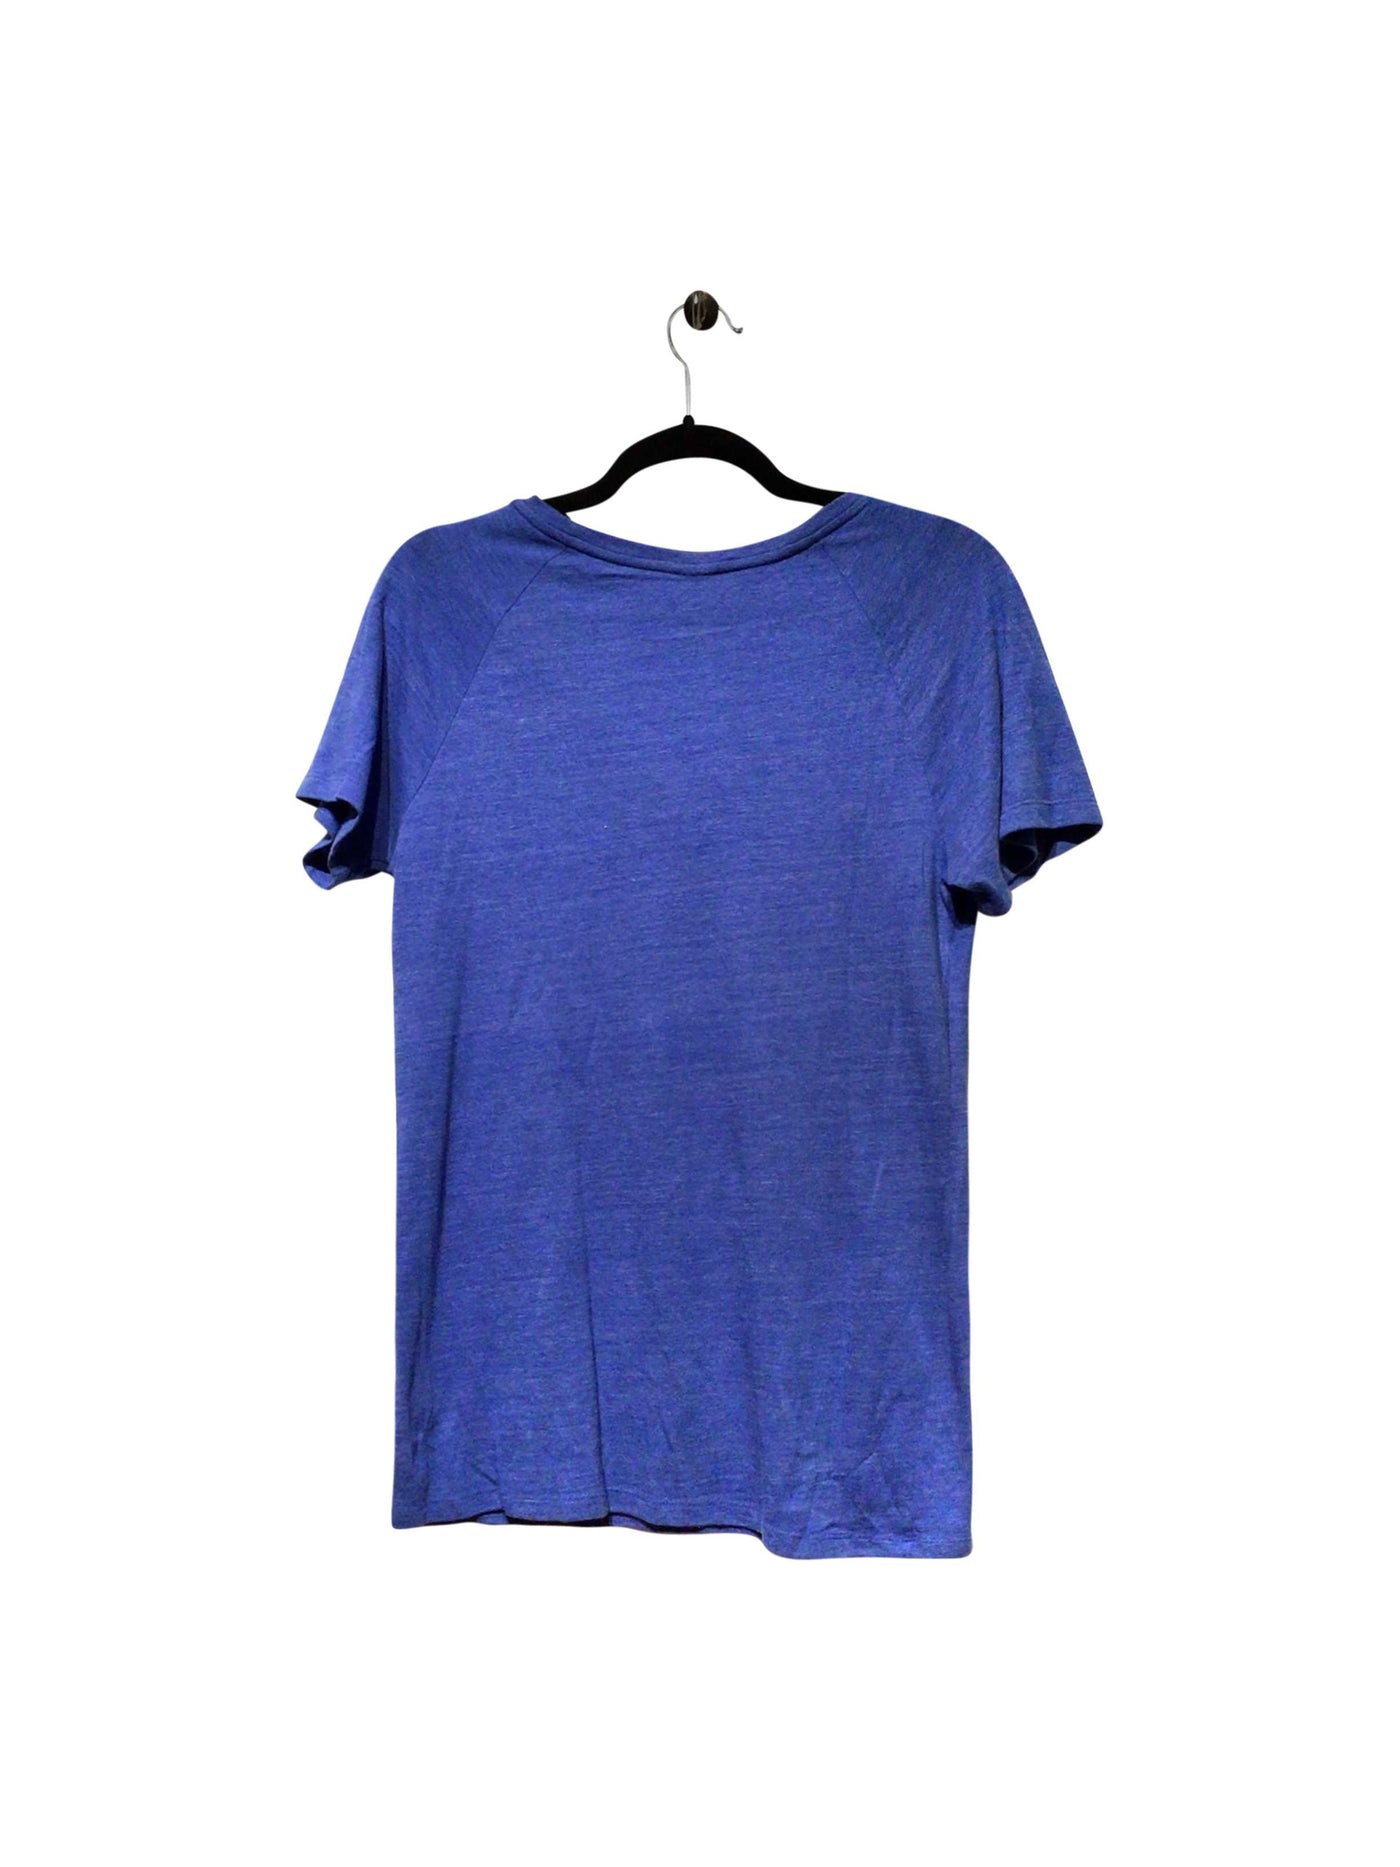 REEBOK Regular fit T-shirt in Blue  -  XL  15.99 Koop